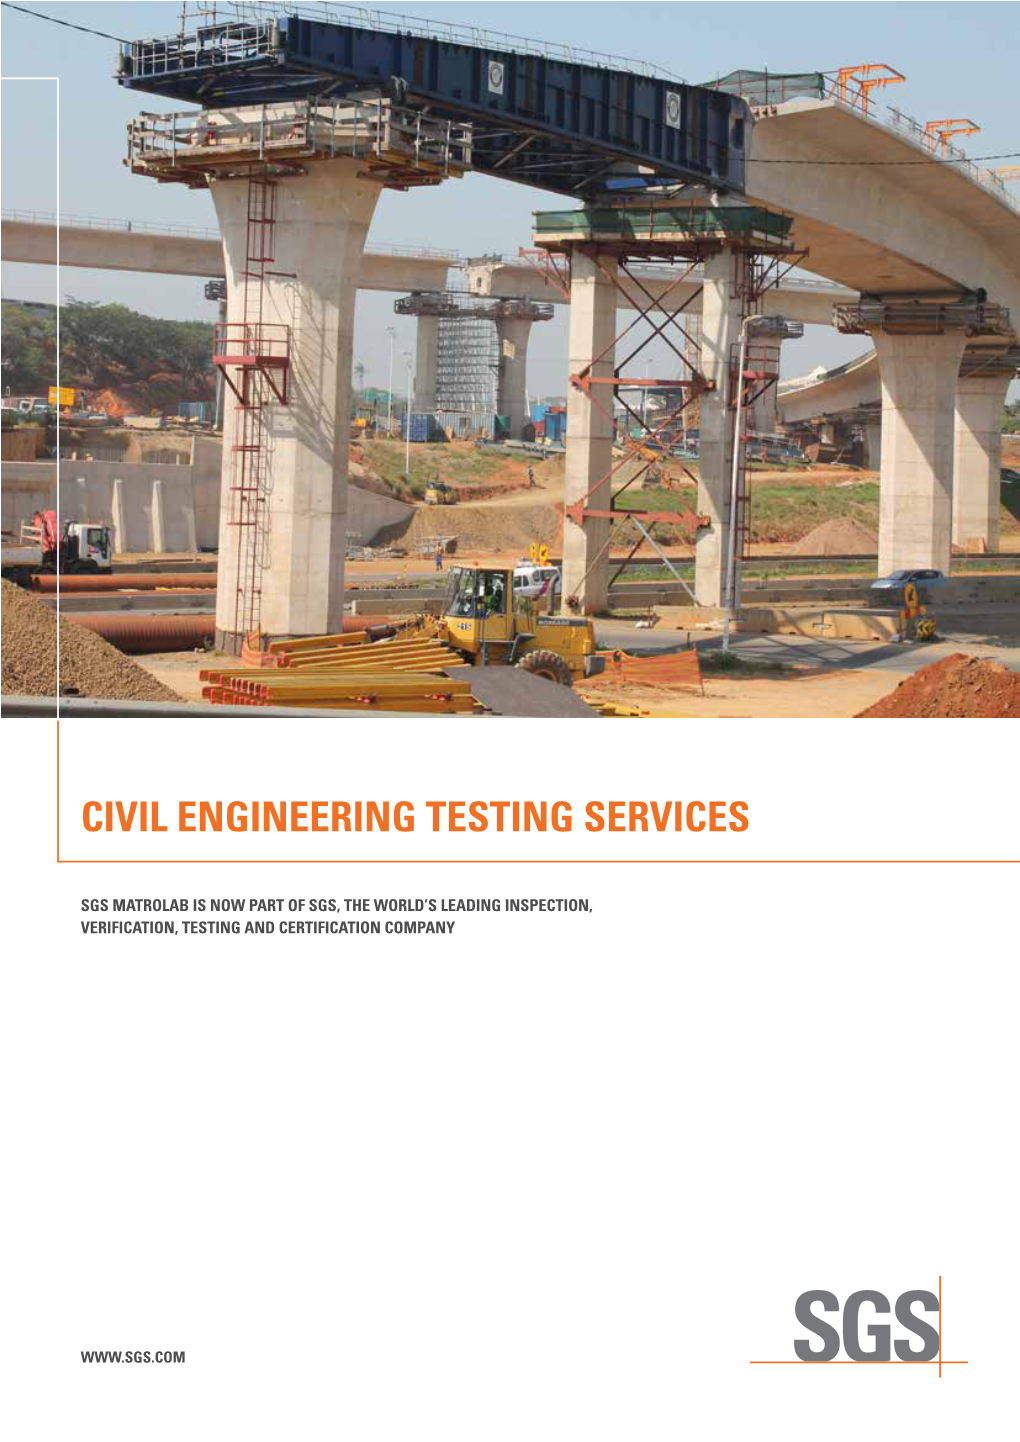 Civil Engineering Testing Services